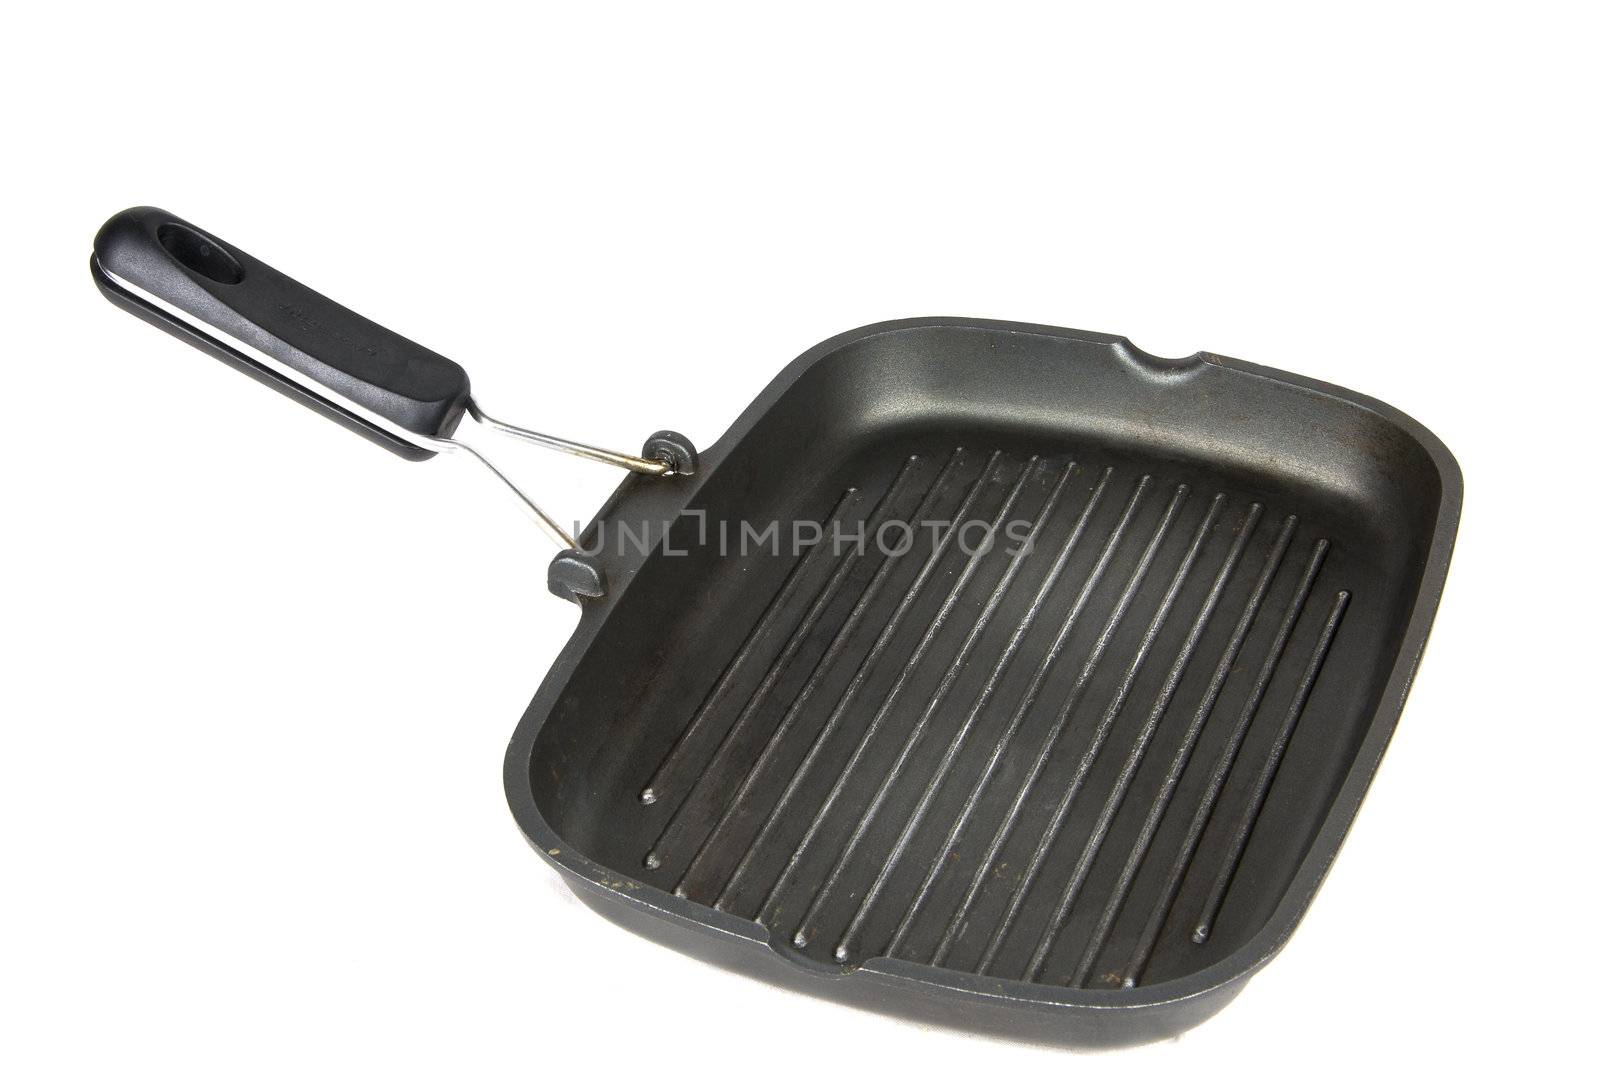 grill pan by danilobiancalana